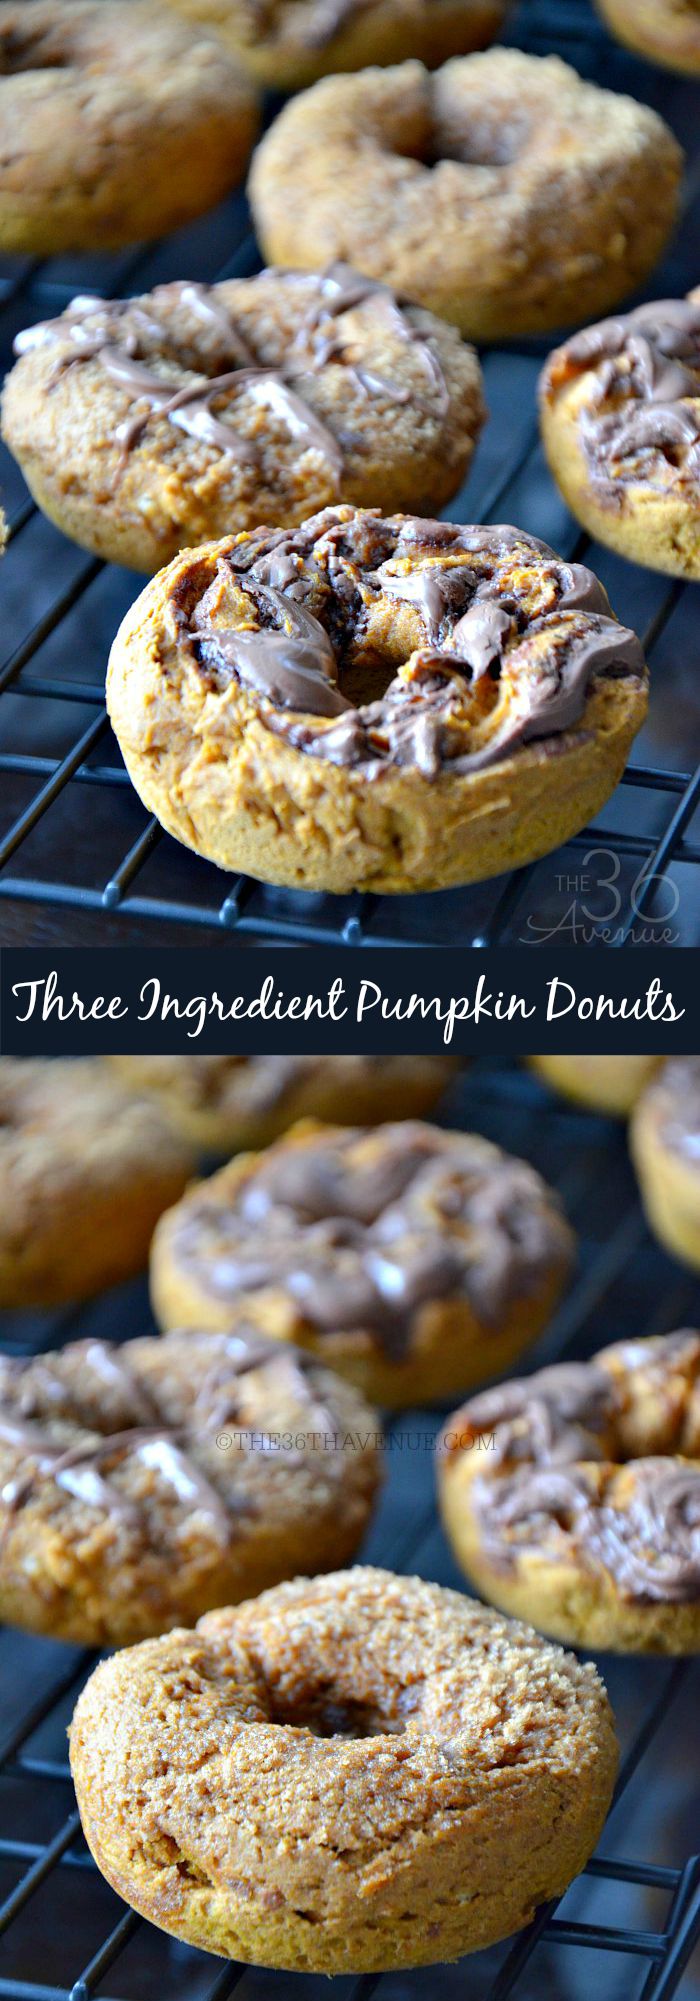 Pumpkin Donut Recipes by the36thavenue.com